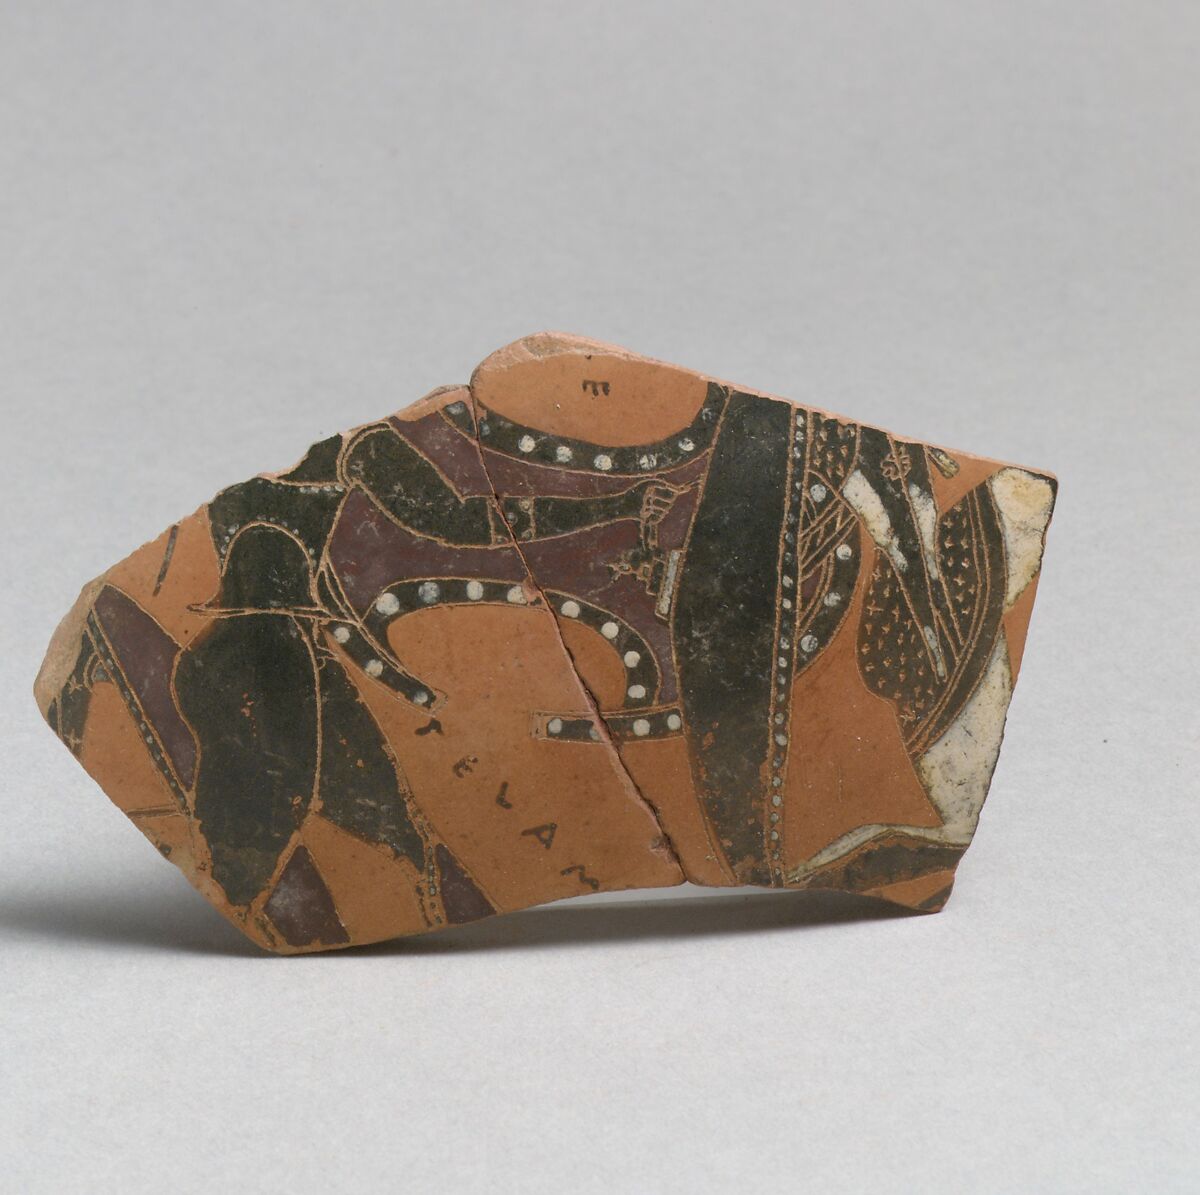 Neck-amphora, Tyrrhenian fragments, Attributed to the Prometheus Painter, Terracotta, Greek, Attic 